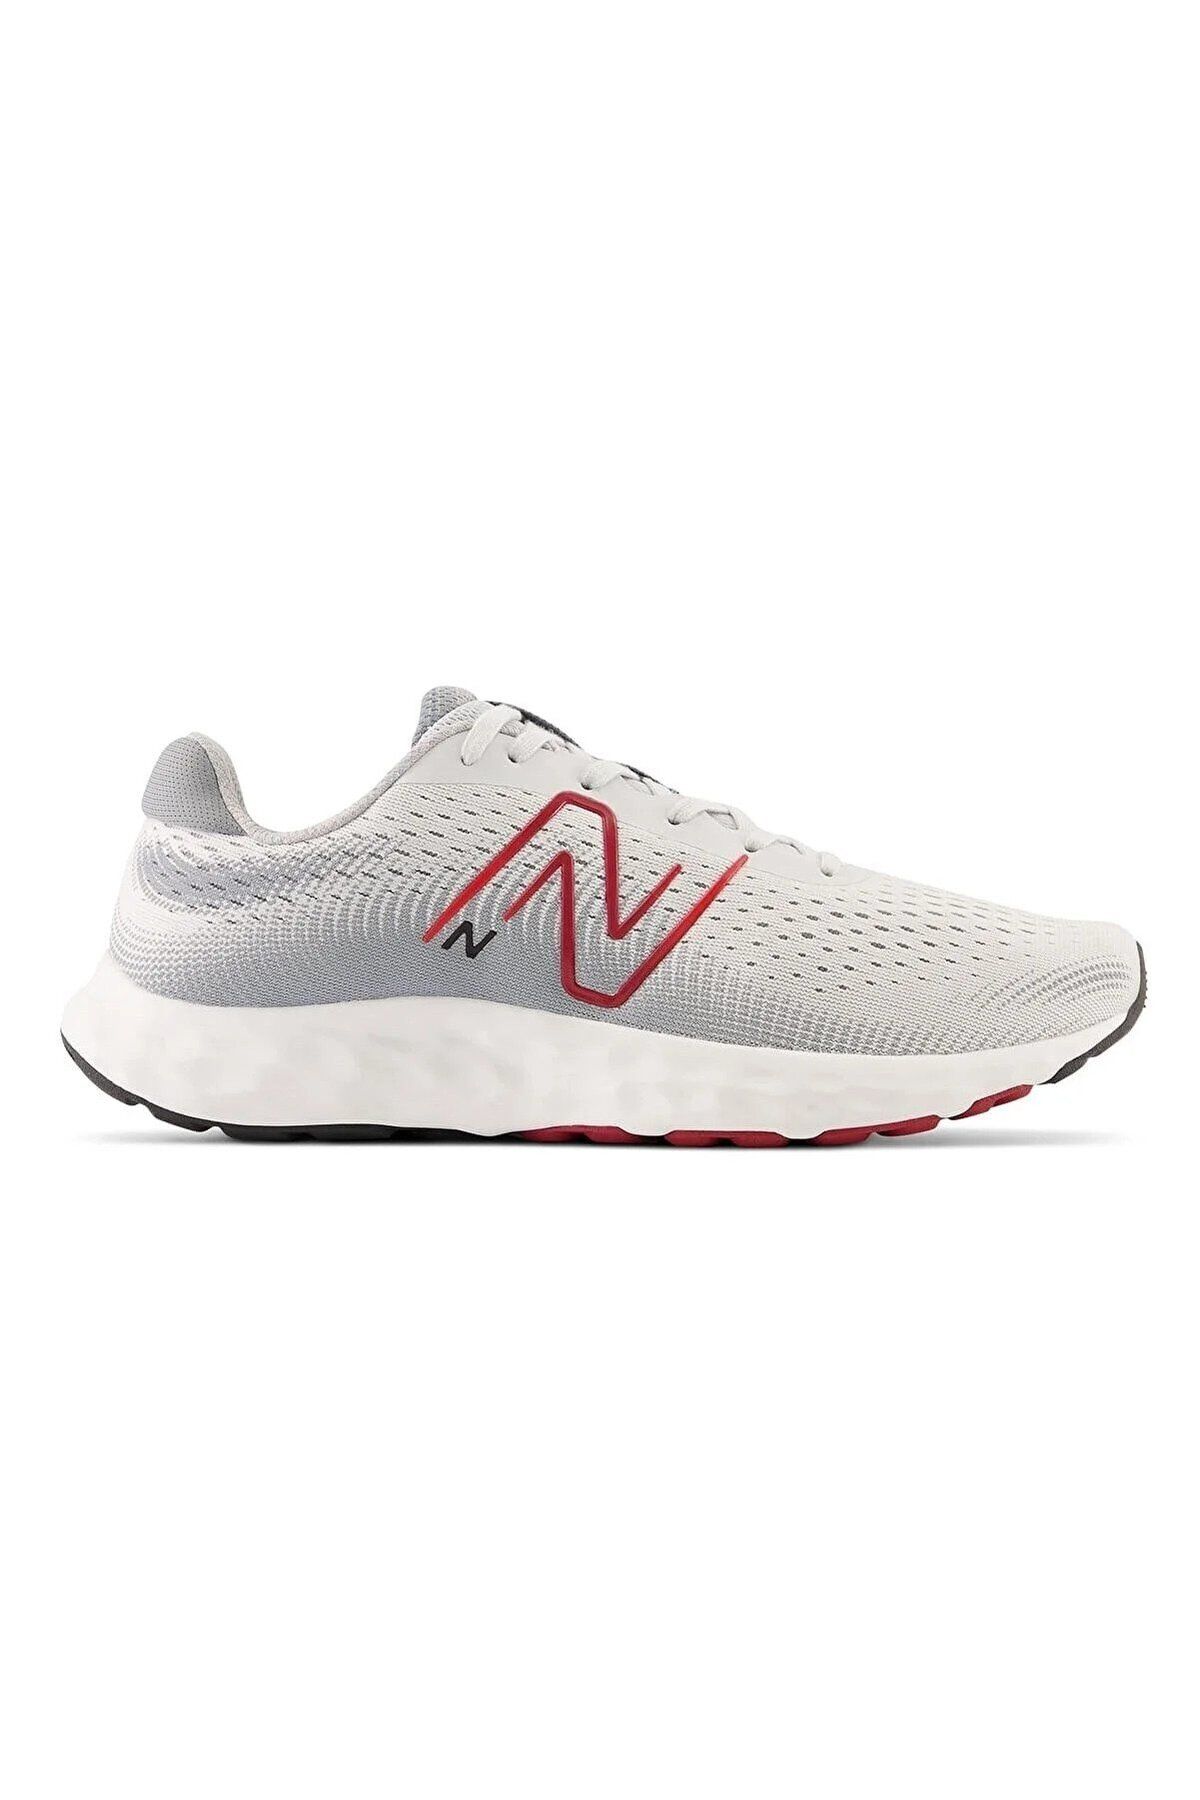 New Balance NB Running Men Shoes